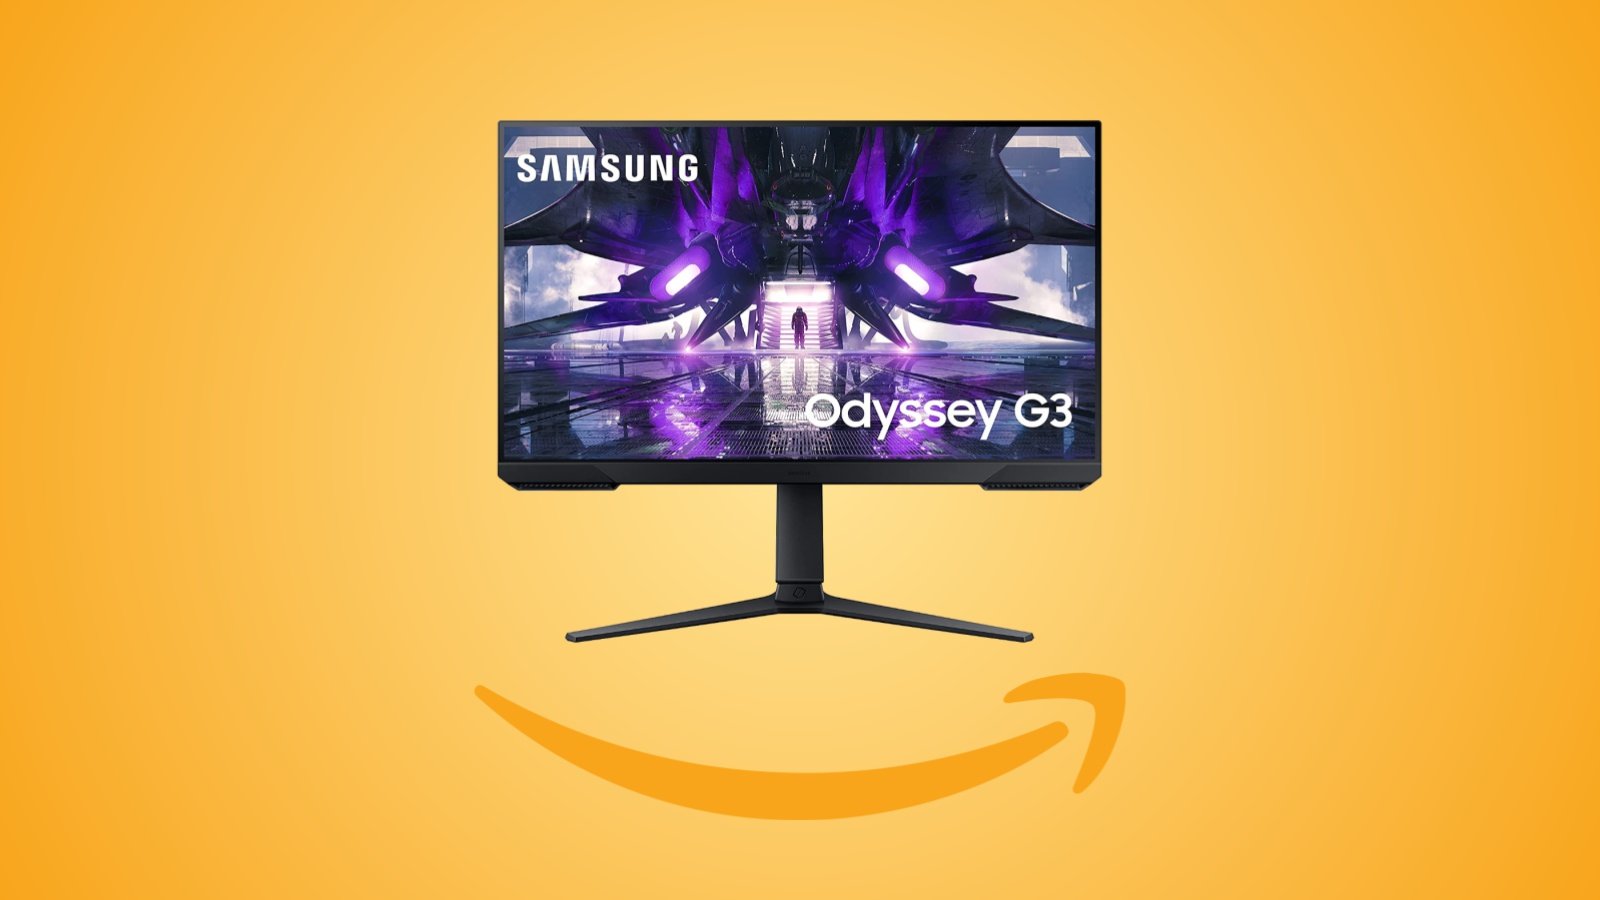 Offerte Amazon: Samsung Monitor Gaming Odyssey G3 al prezzo minimo storico